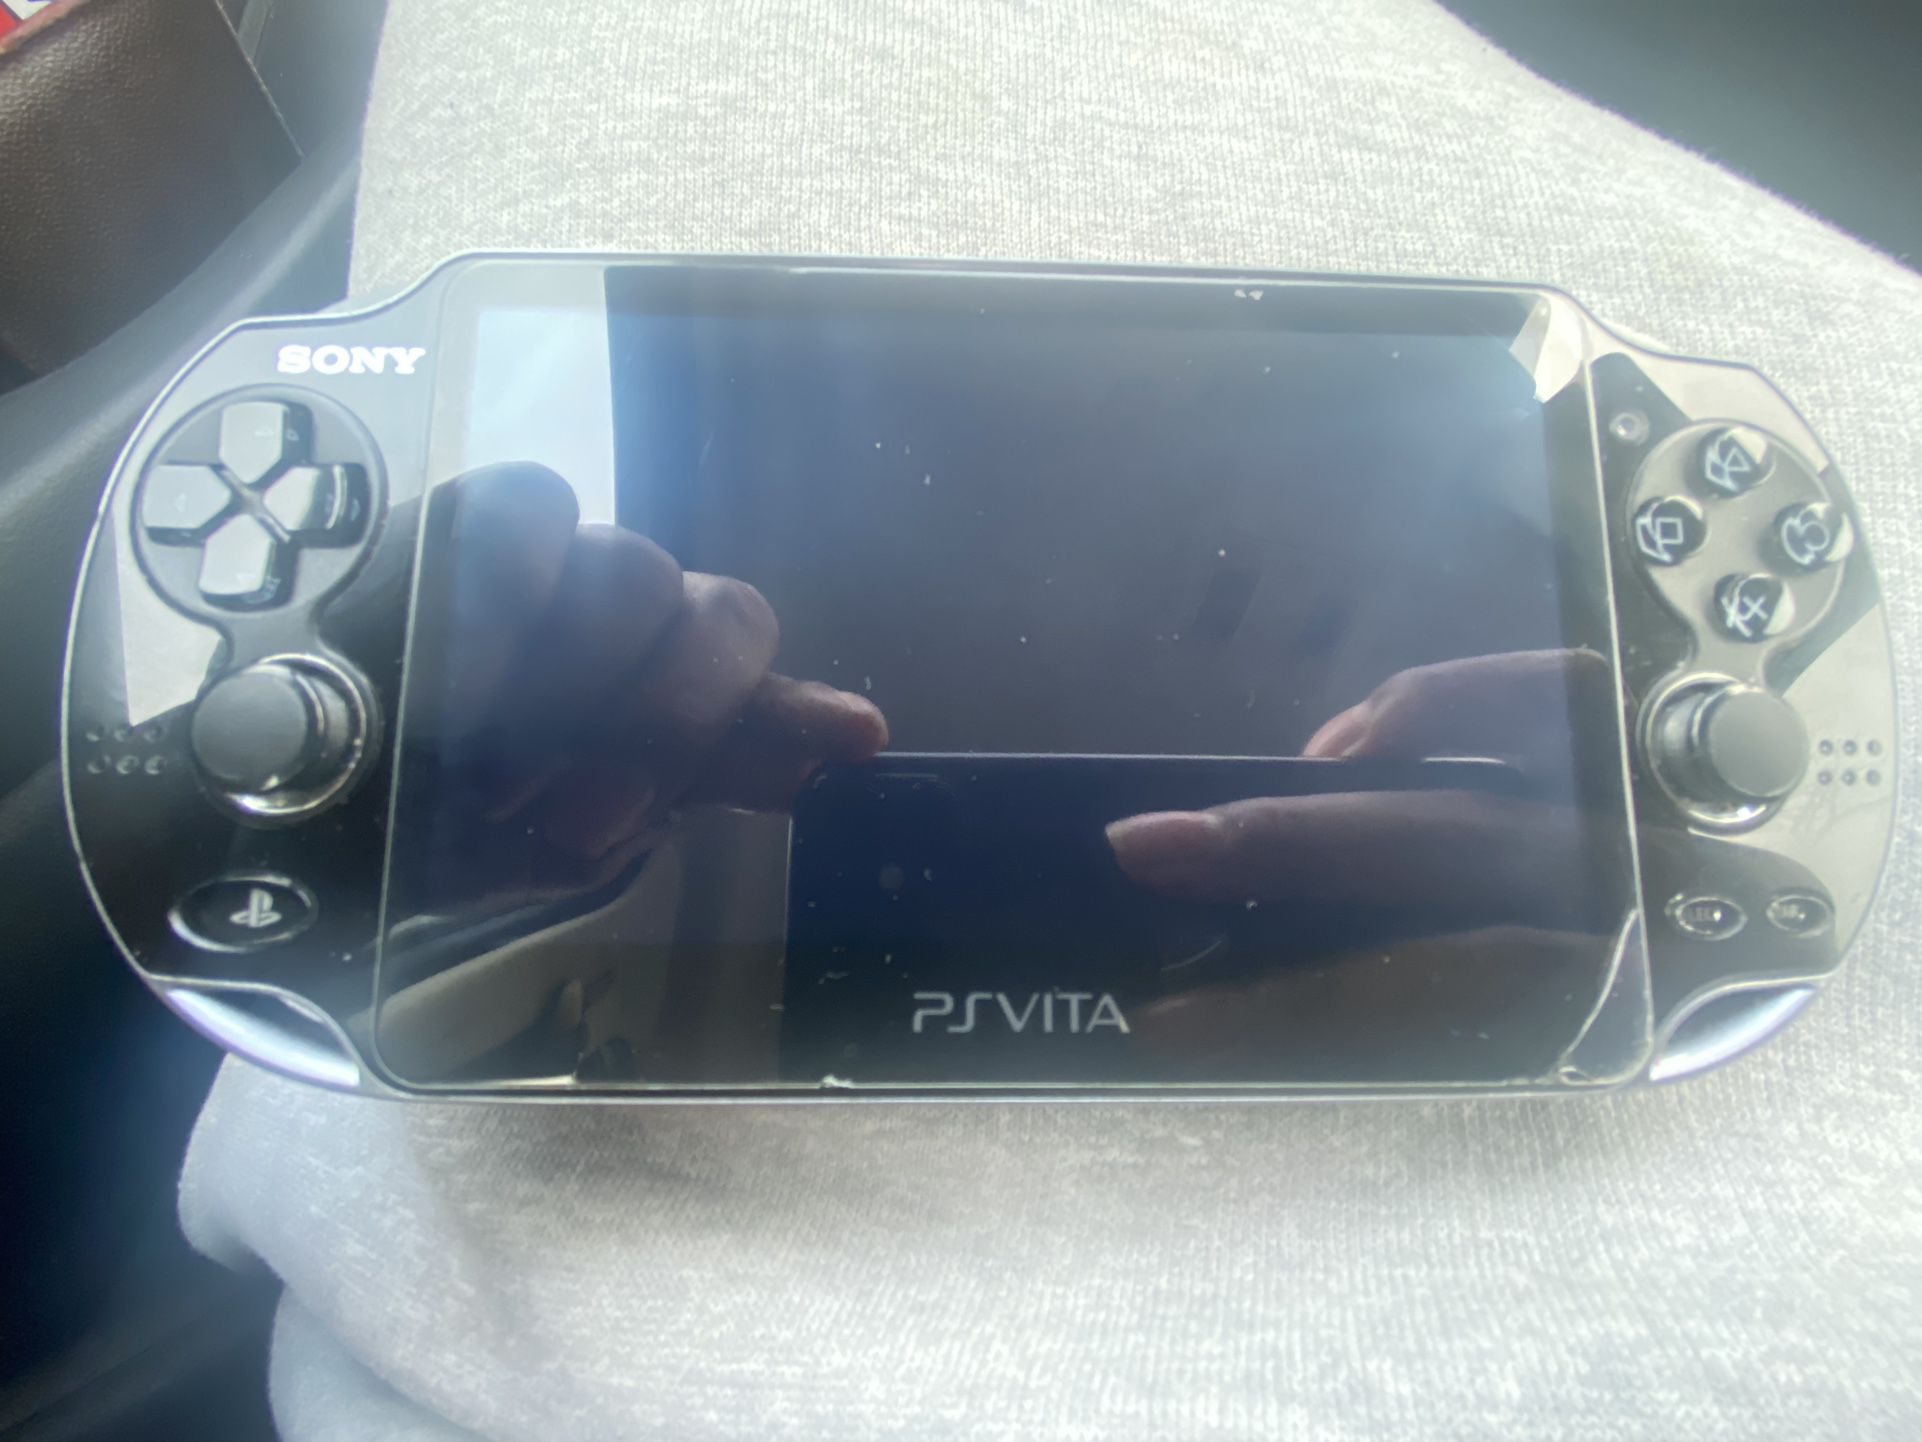 Modded PS Vita